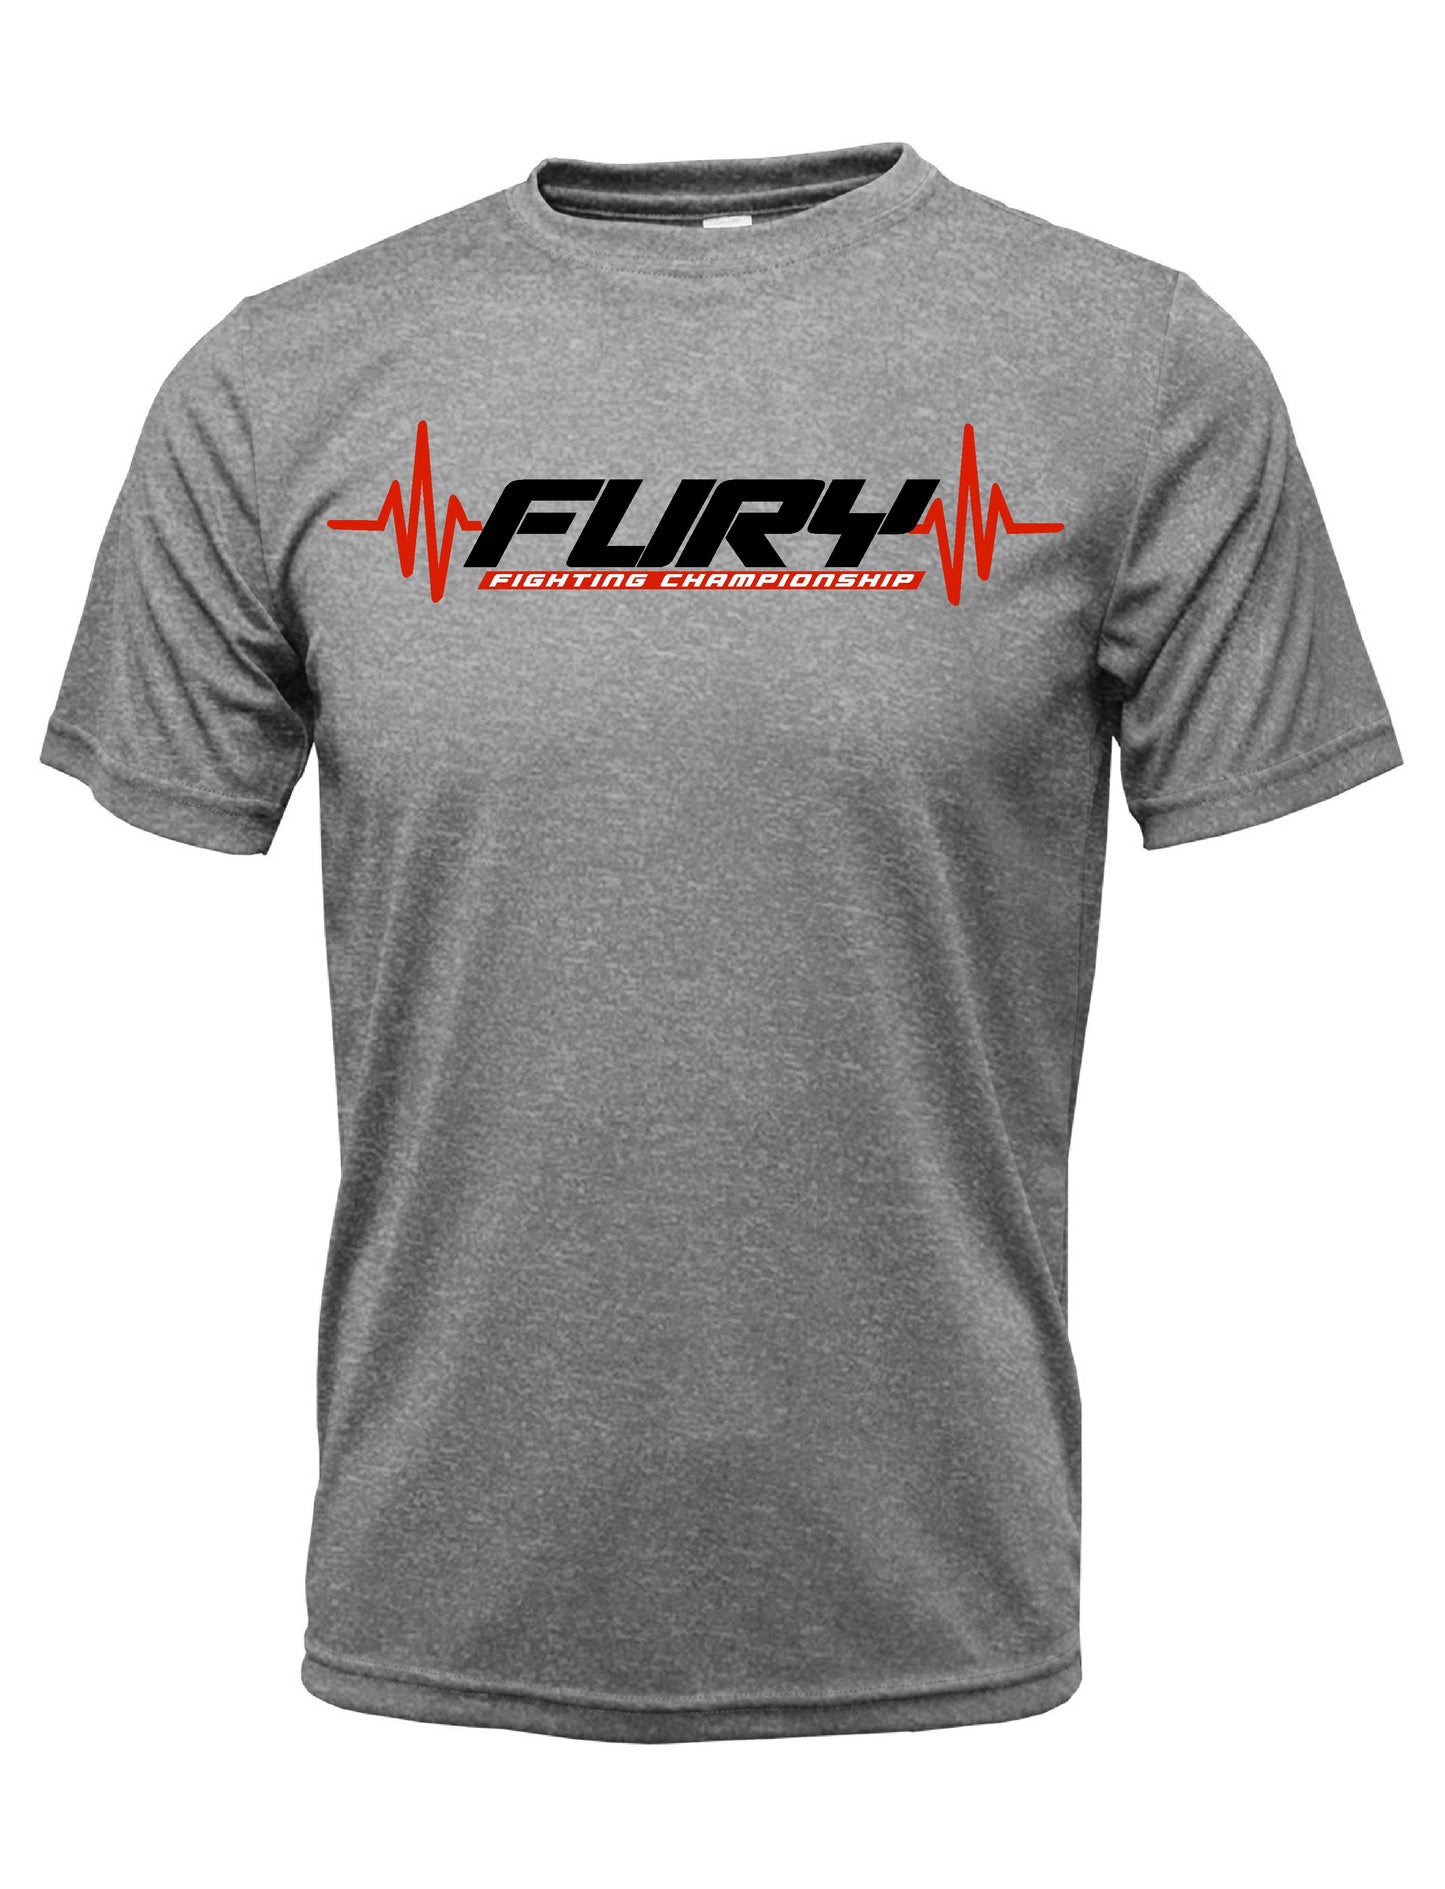 Fury Heartbeat Cotton Blend T-shirt